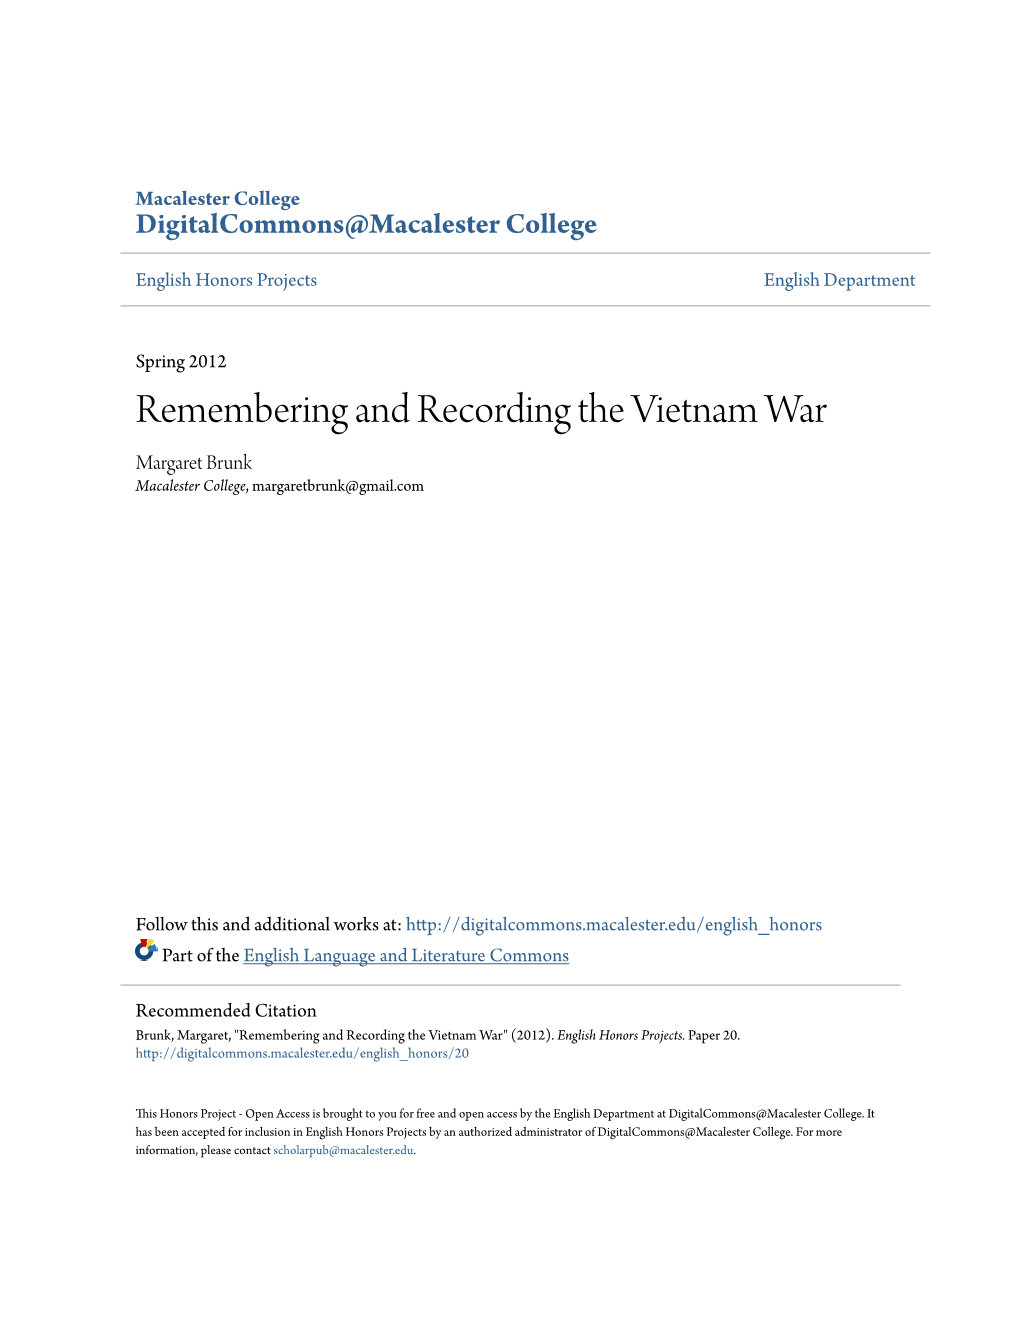 Remembering and Recording the Vietnam War Margaret Brunk Macalester College, Margaretbrunk@Gmail.Com